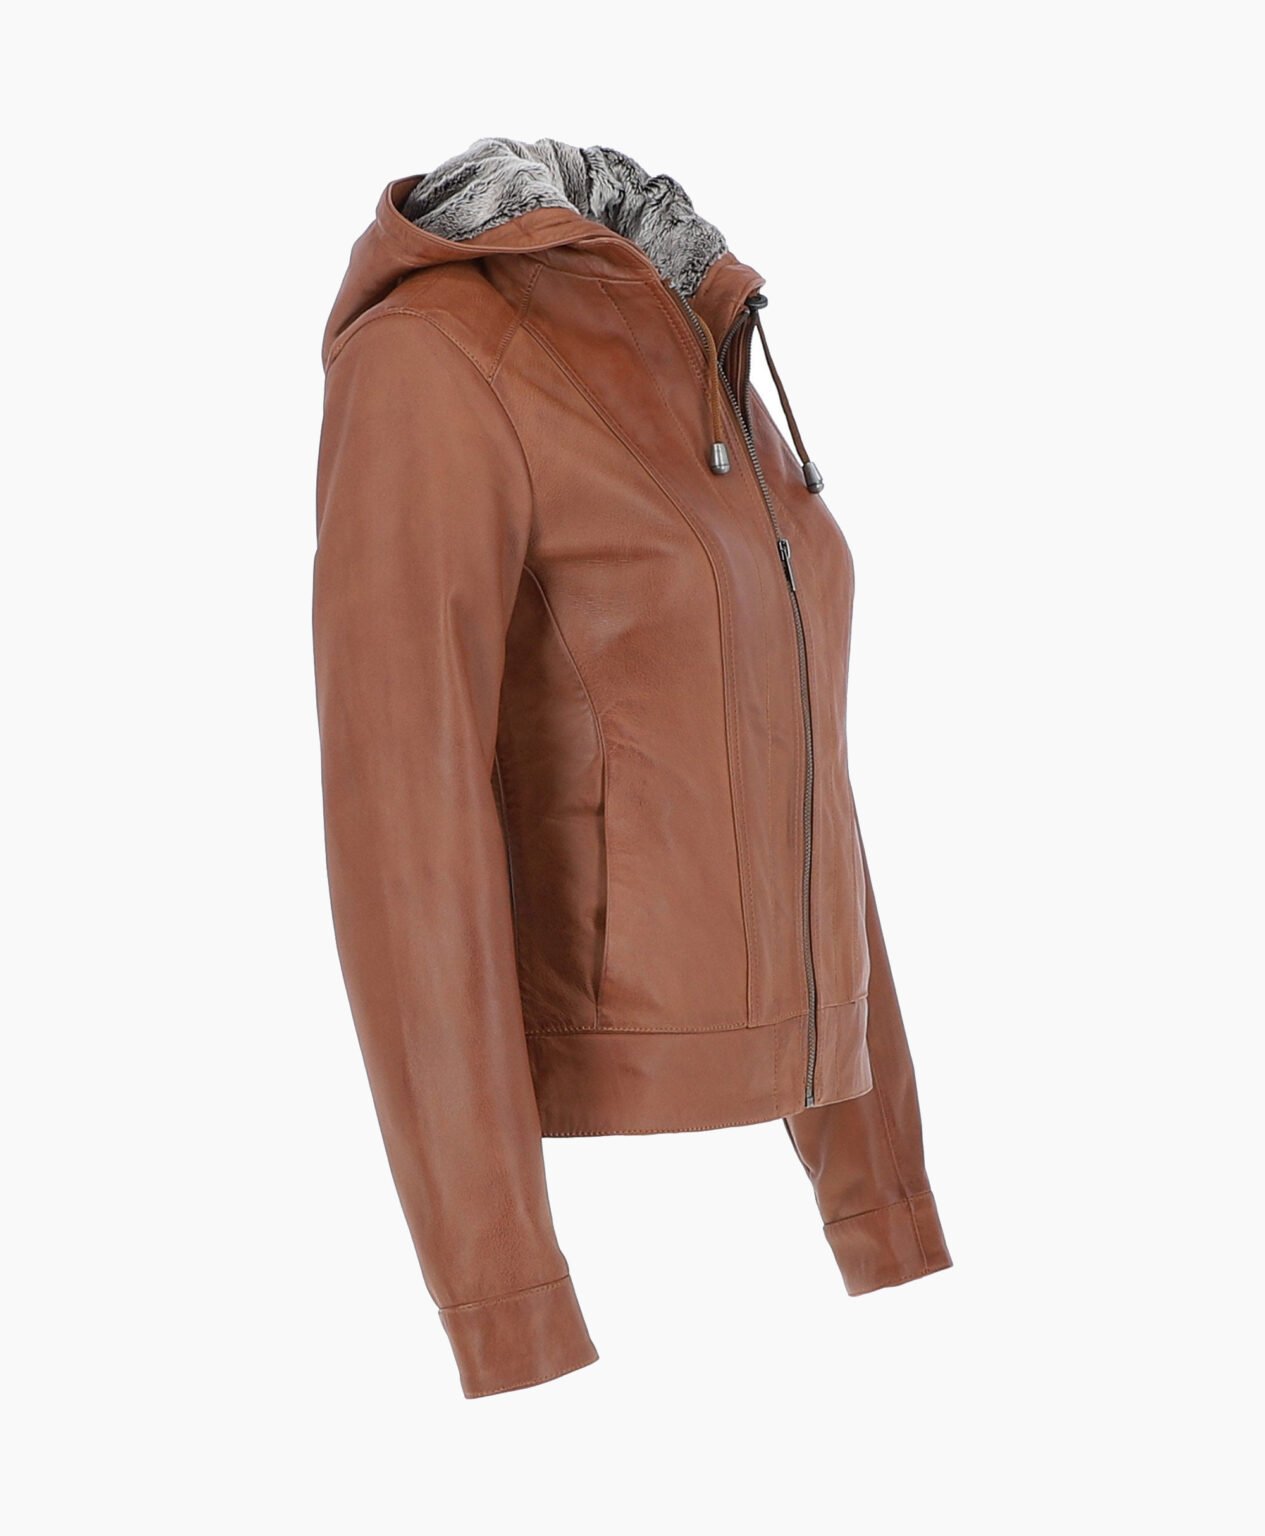 vogue-jacket-leather-hooded-jacket-tan-sarasota-image203